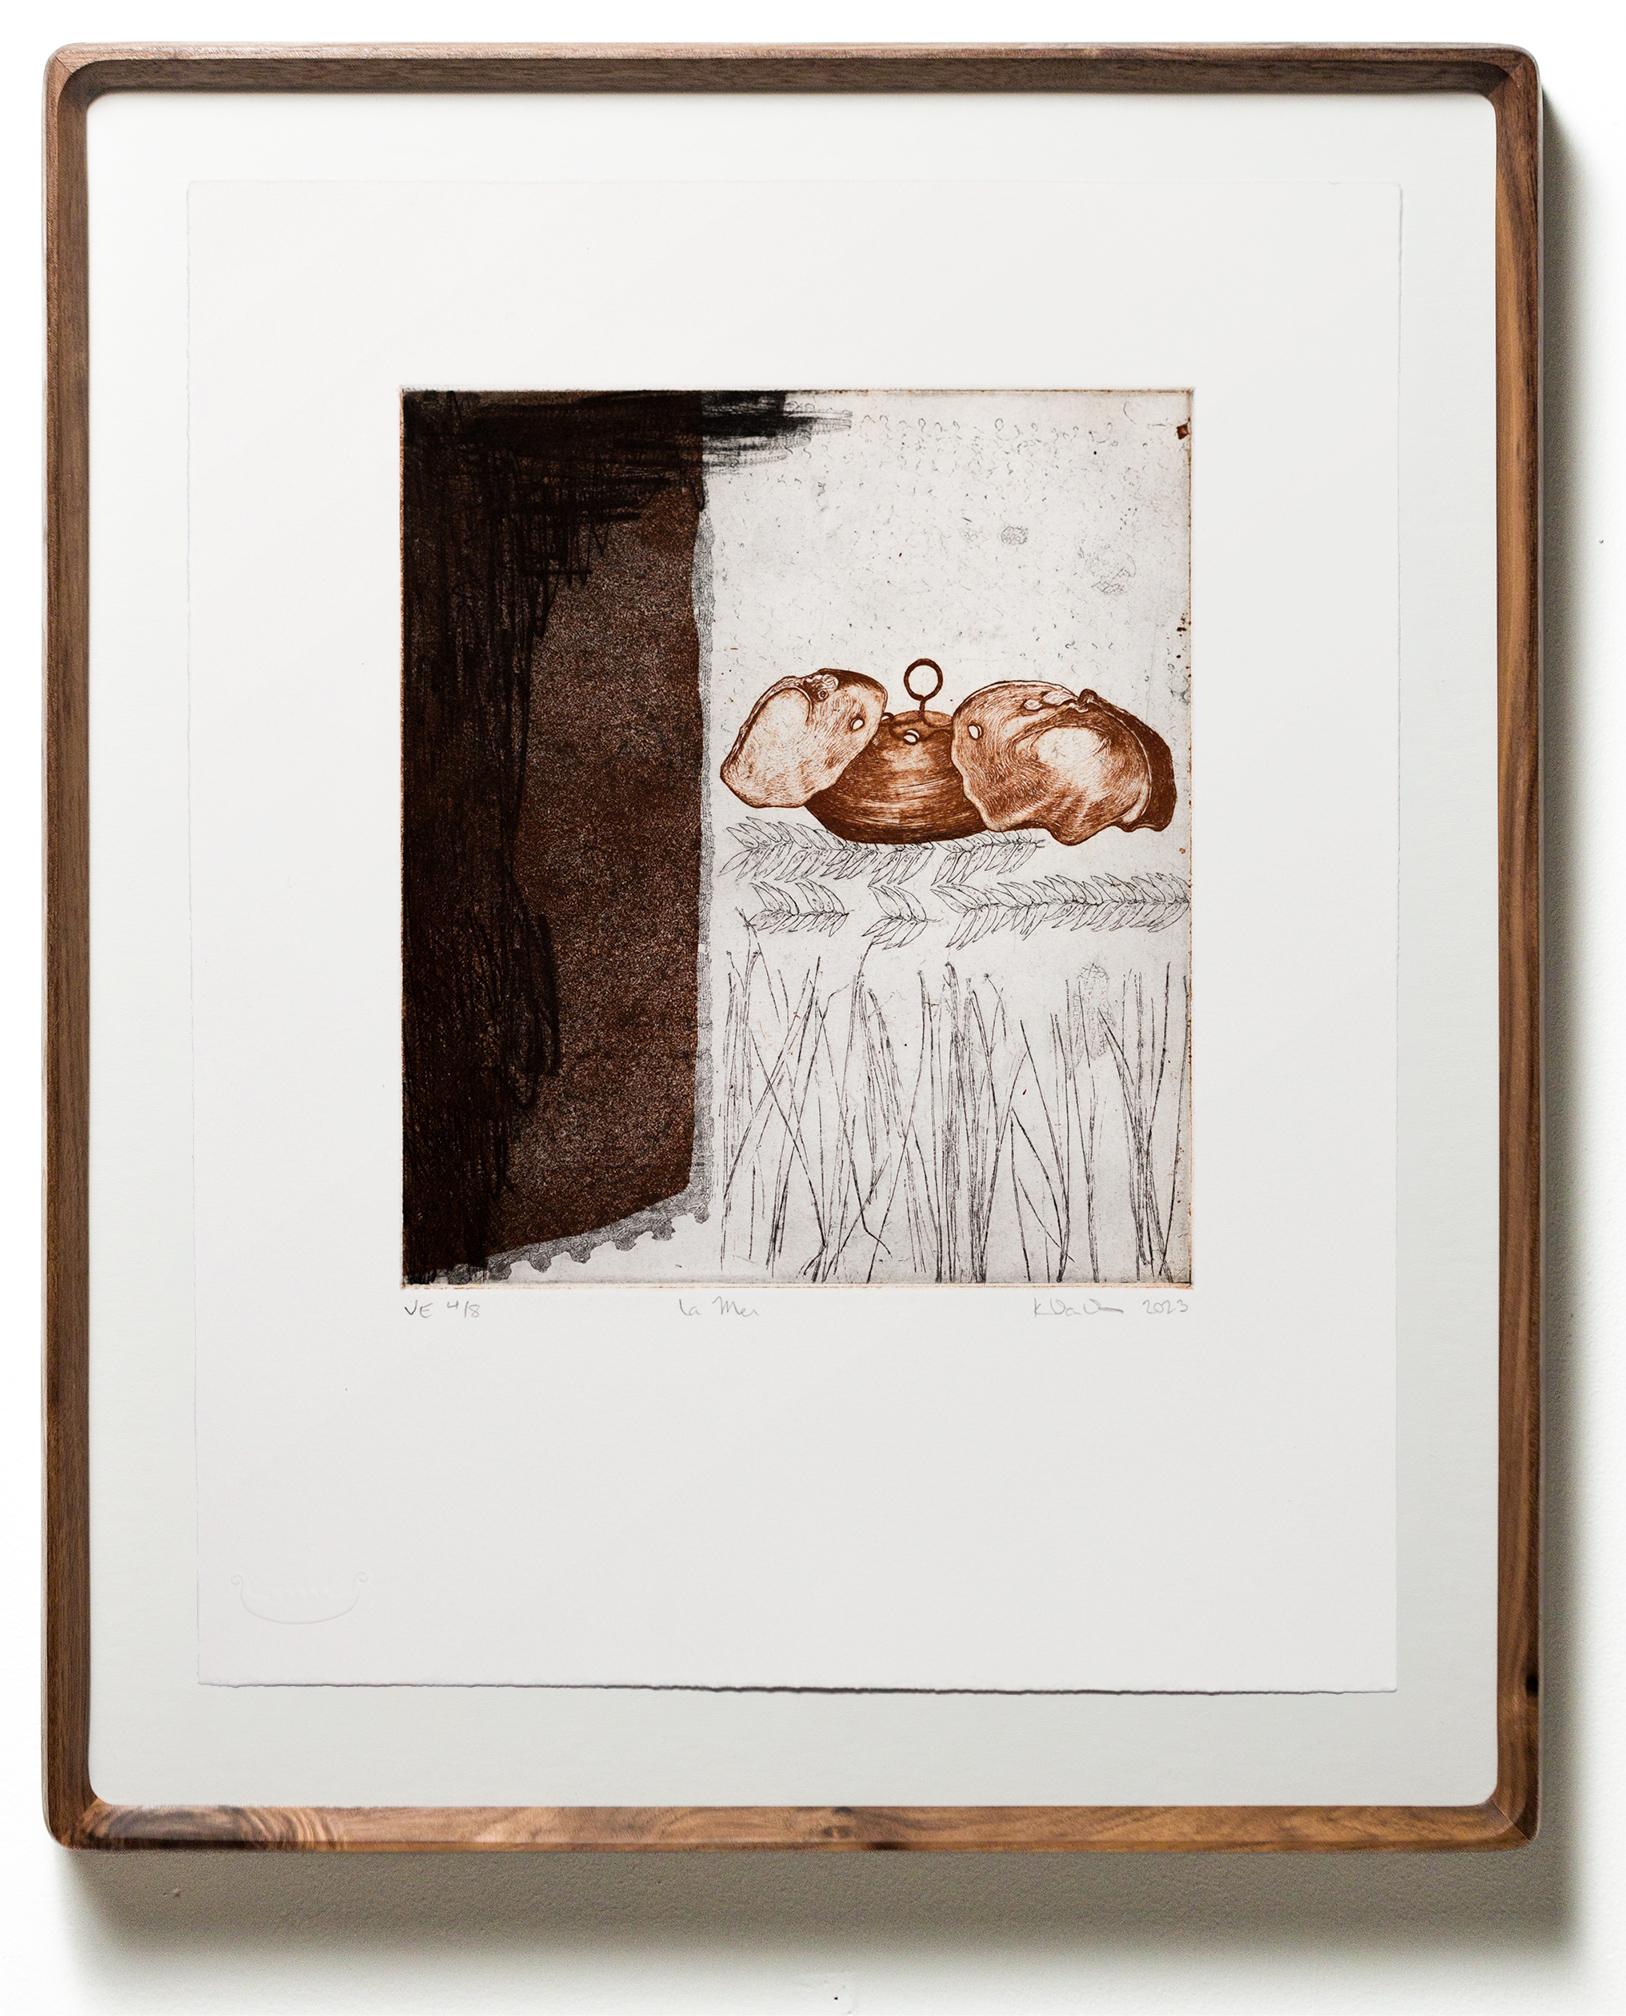 Katie VanVliet Still-Life Print - "La Mer VE 4/8" Intaglio, hand colored, seashell motif